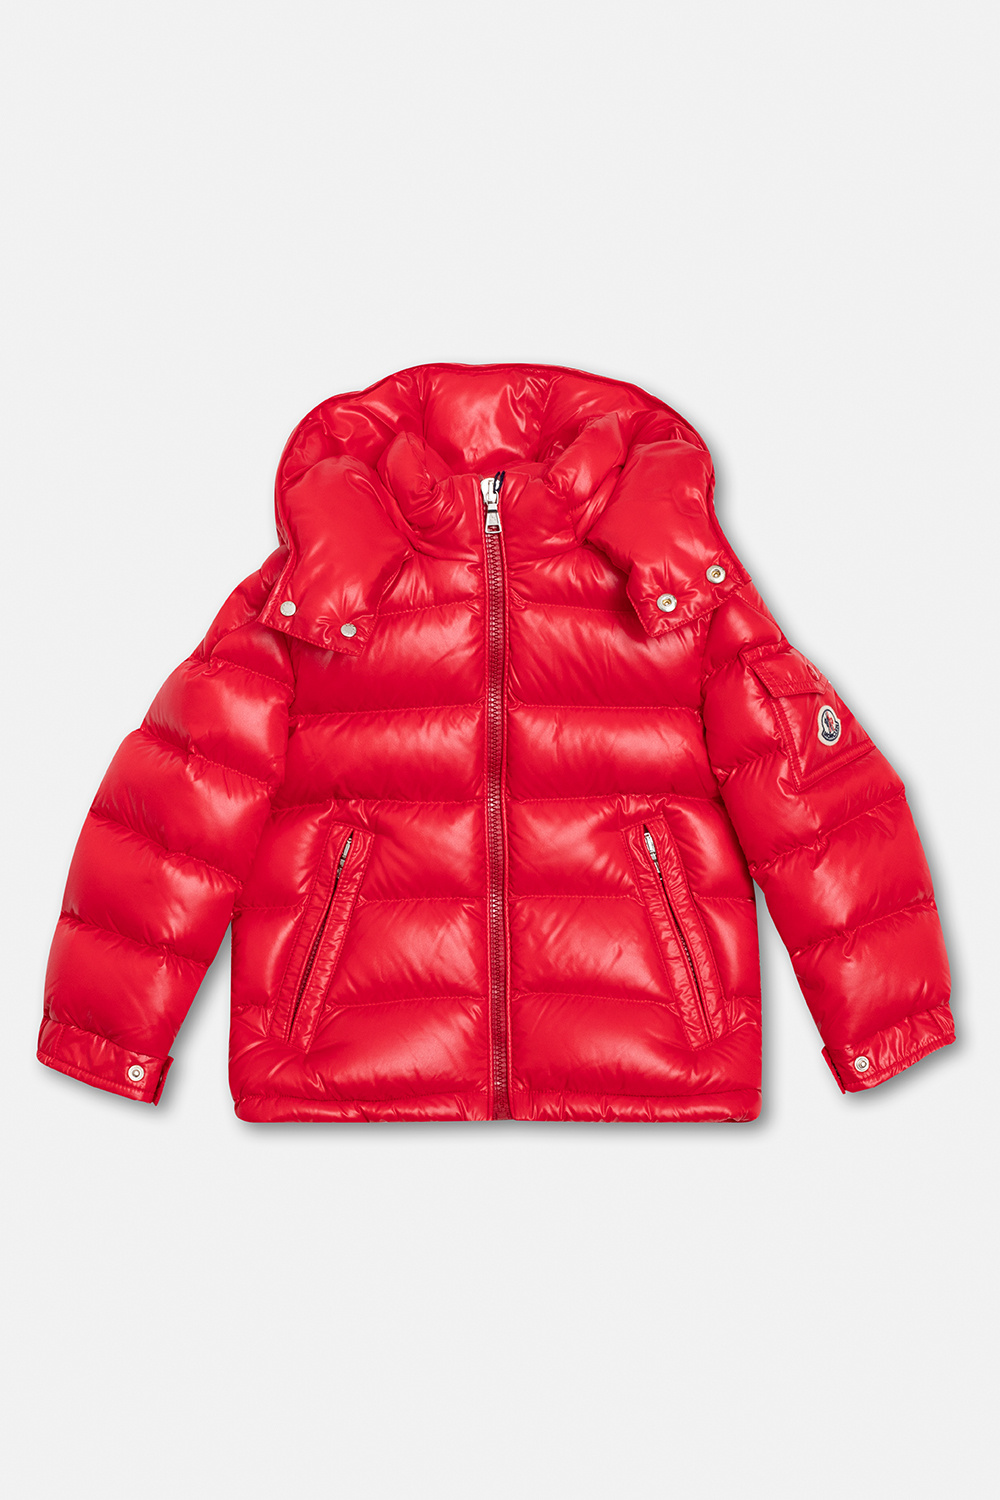 Moncler Enfant ‘New Maya’ down jacket